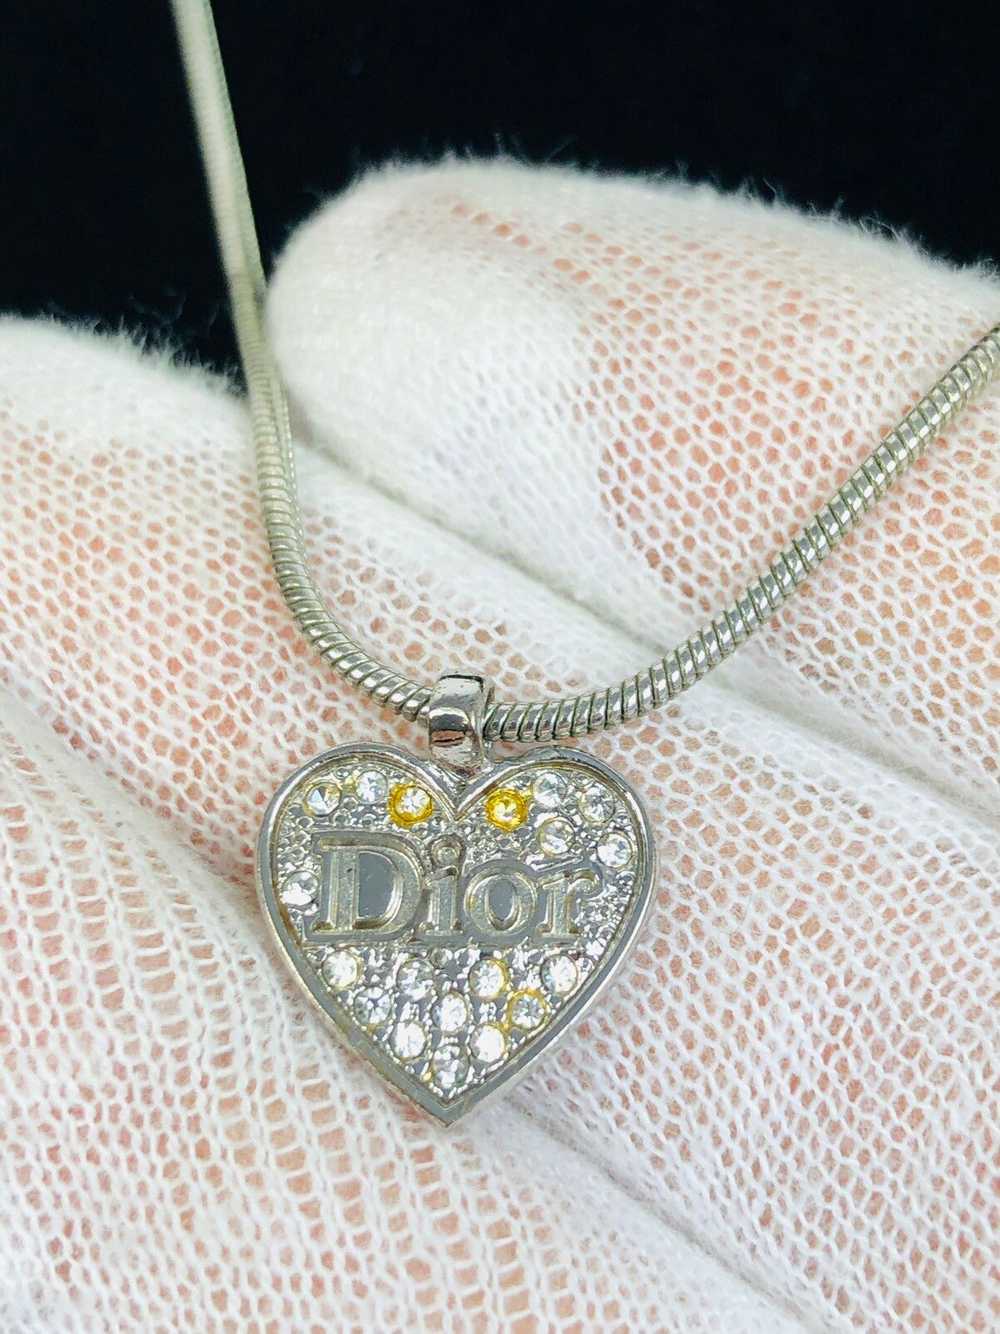 Dior Dior encrusted heart necklace - image 2